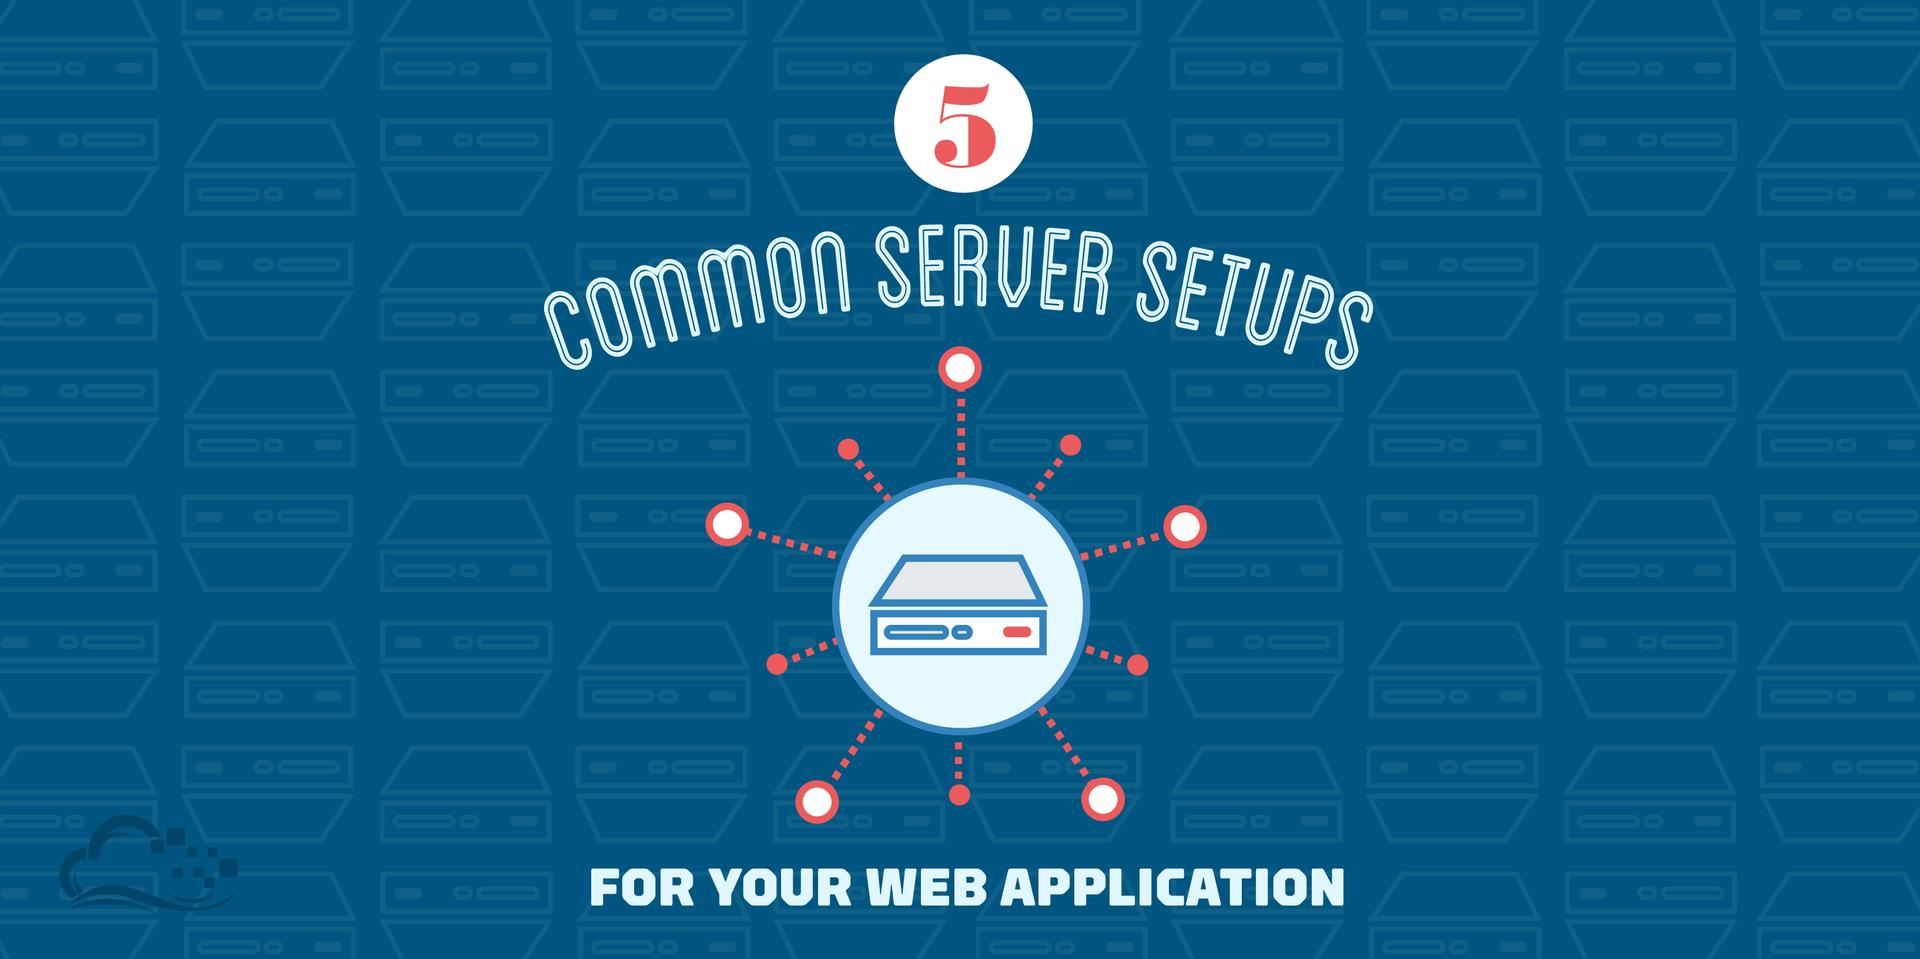 5 Common Server Setups For Your Web Application